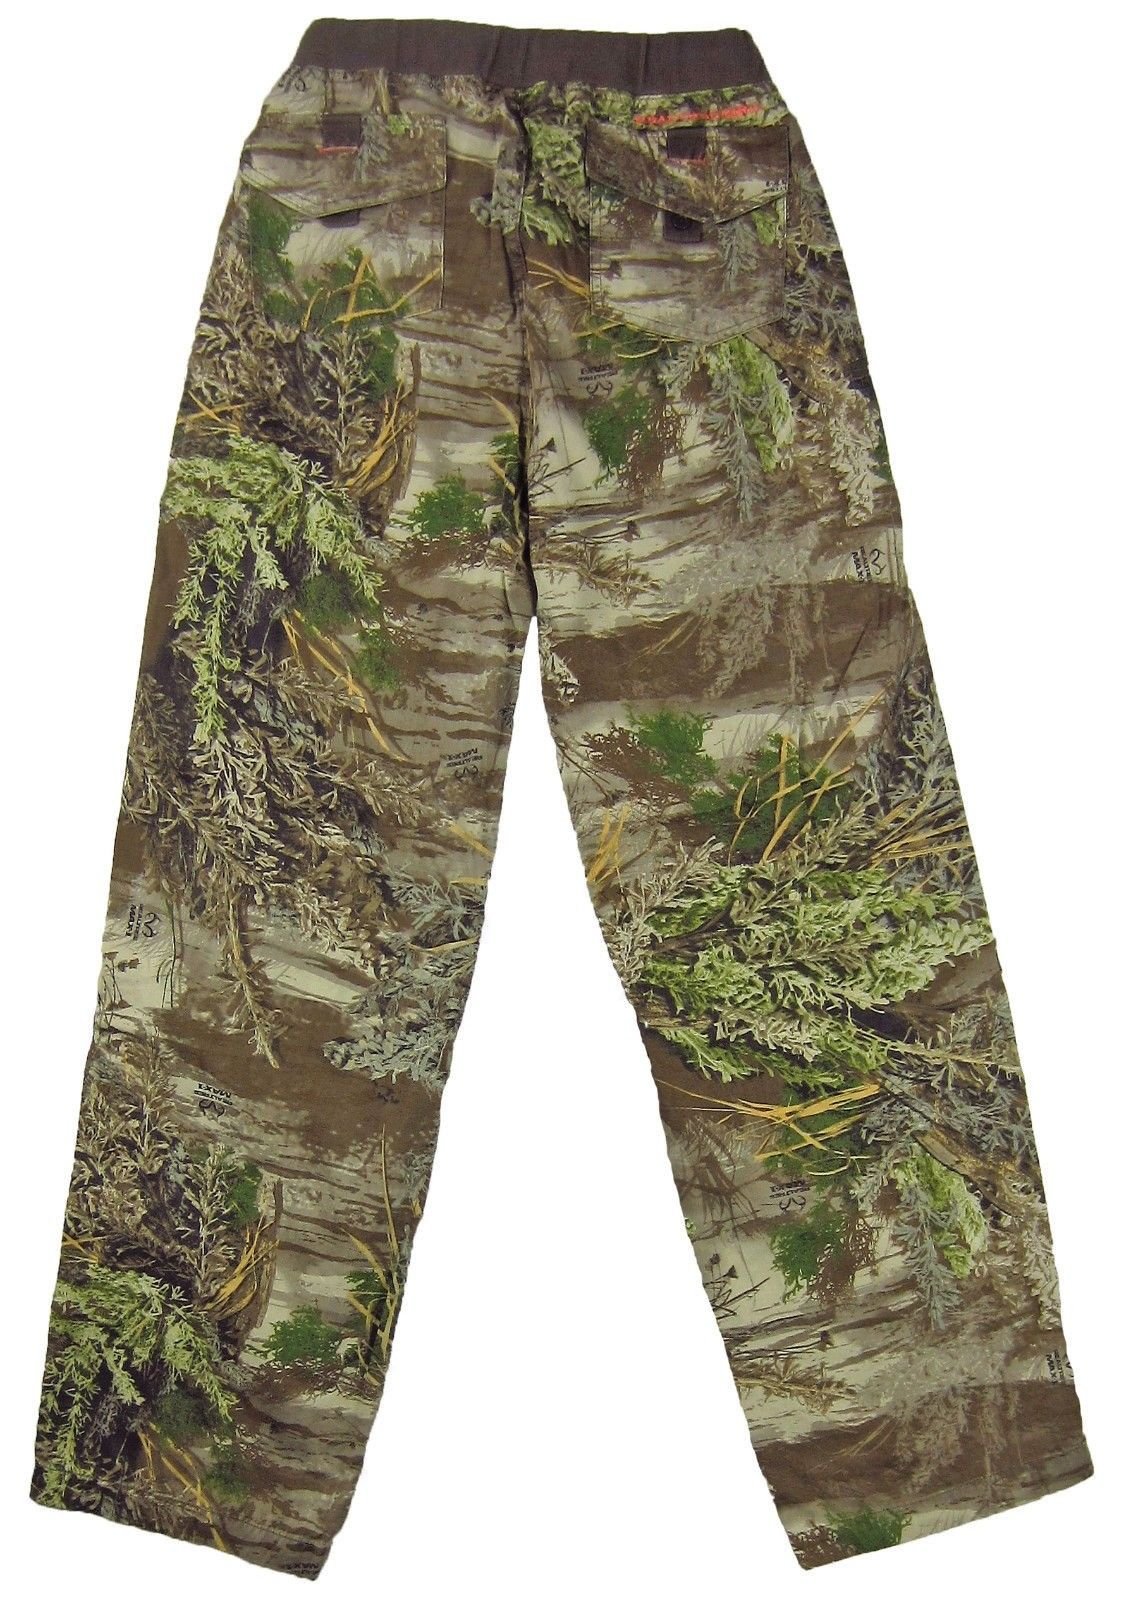 NWT Realtree Girl Sage Pant Max-1 Camo Camouflage Pants Capris Size S & M | eBay